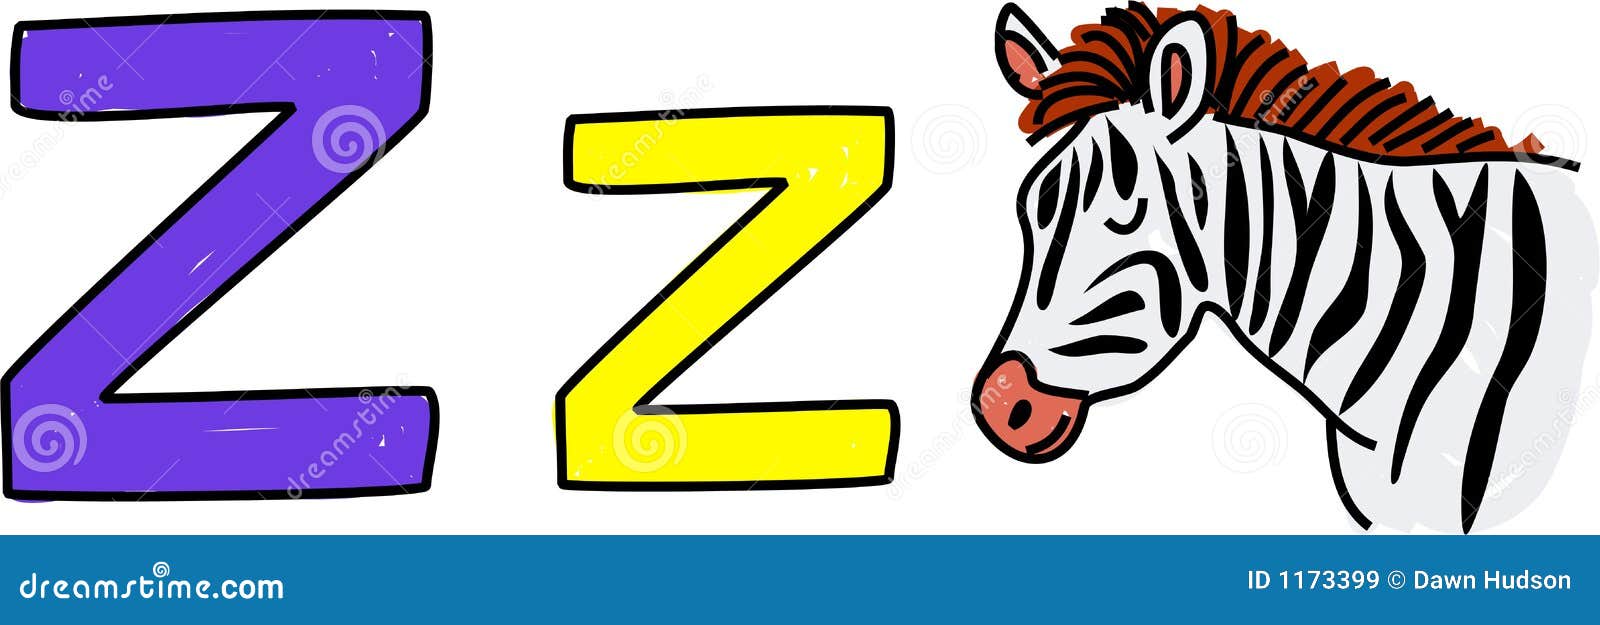 Z is for zebra stock vector. Illustration of zebra, uppercase - 1173399